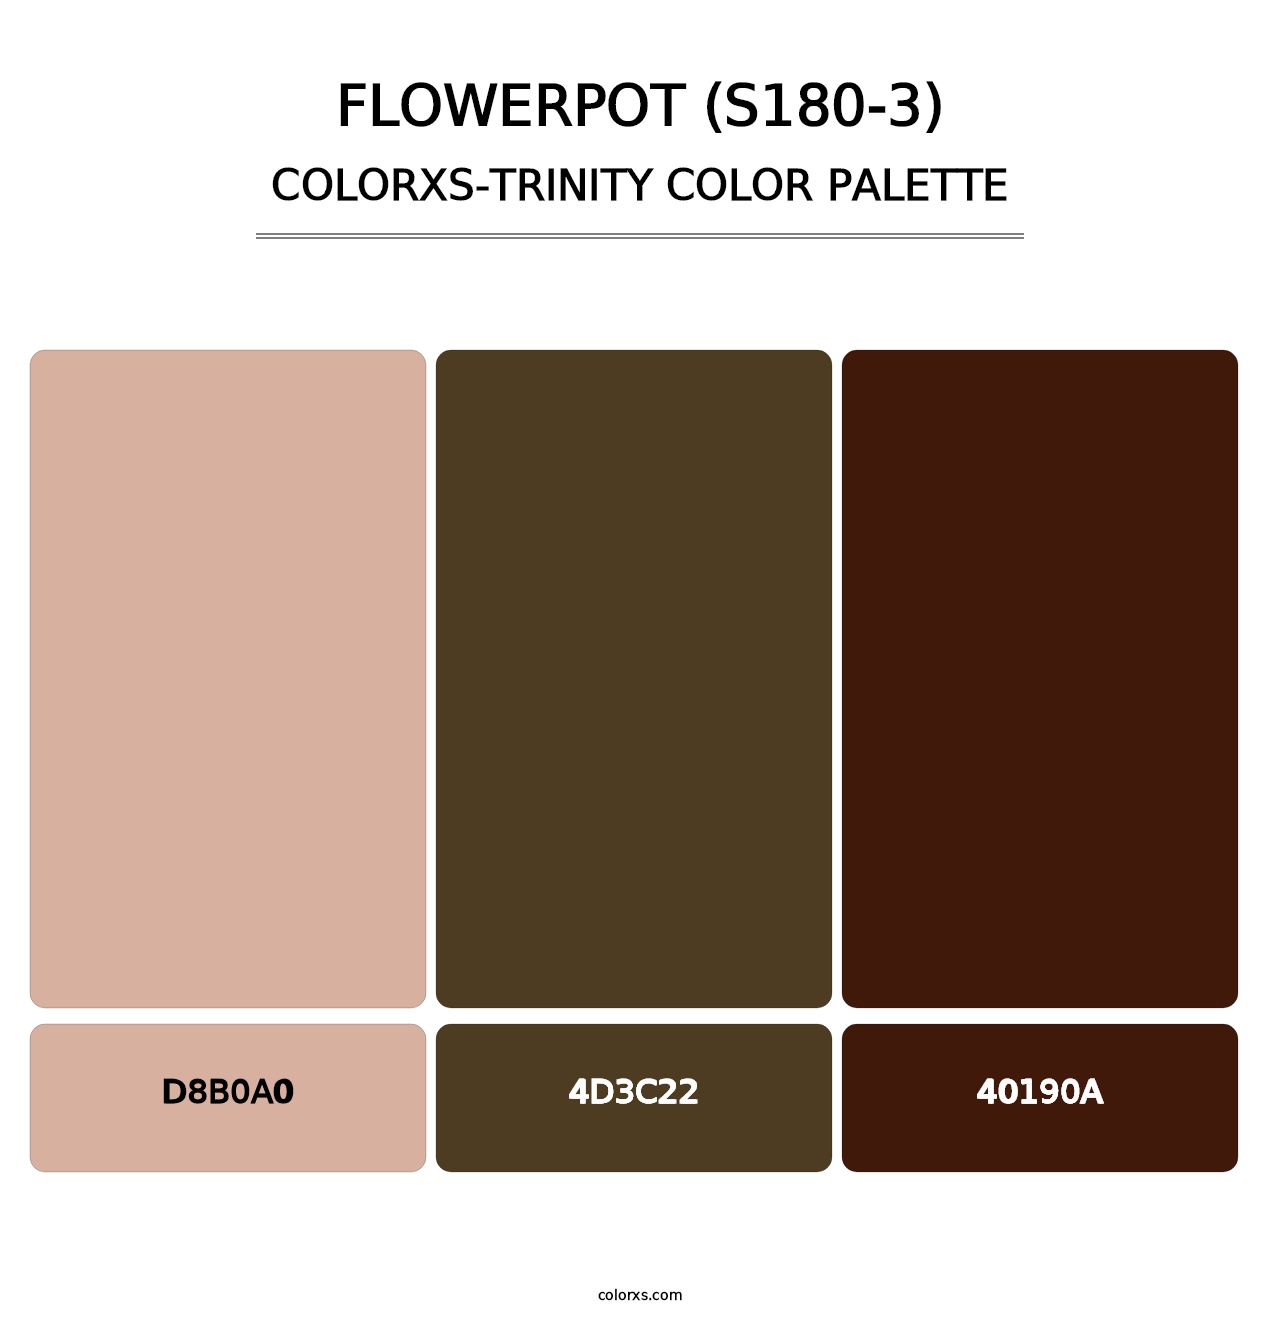 Flowerpot (S180-3) - Colorxs Trinity Palette